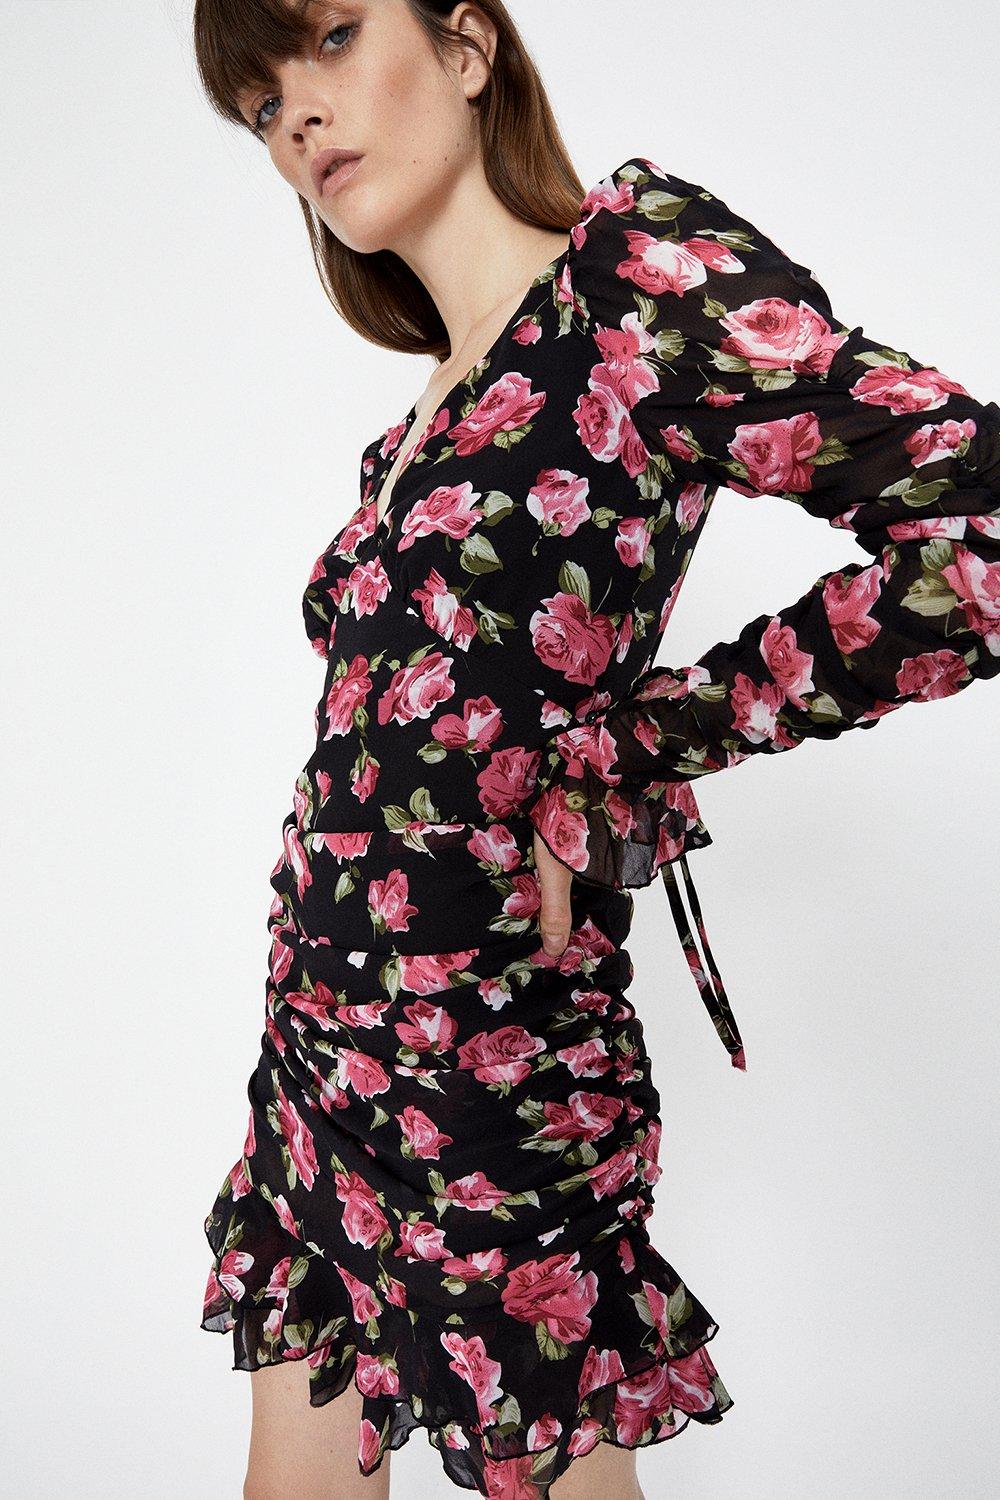 warehouse floral maxi dress